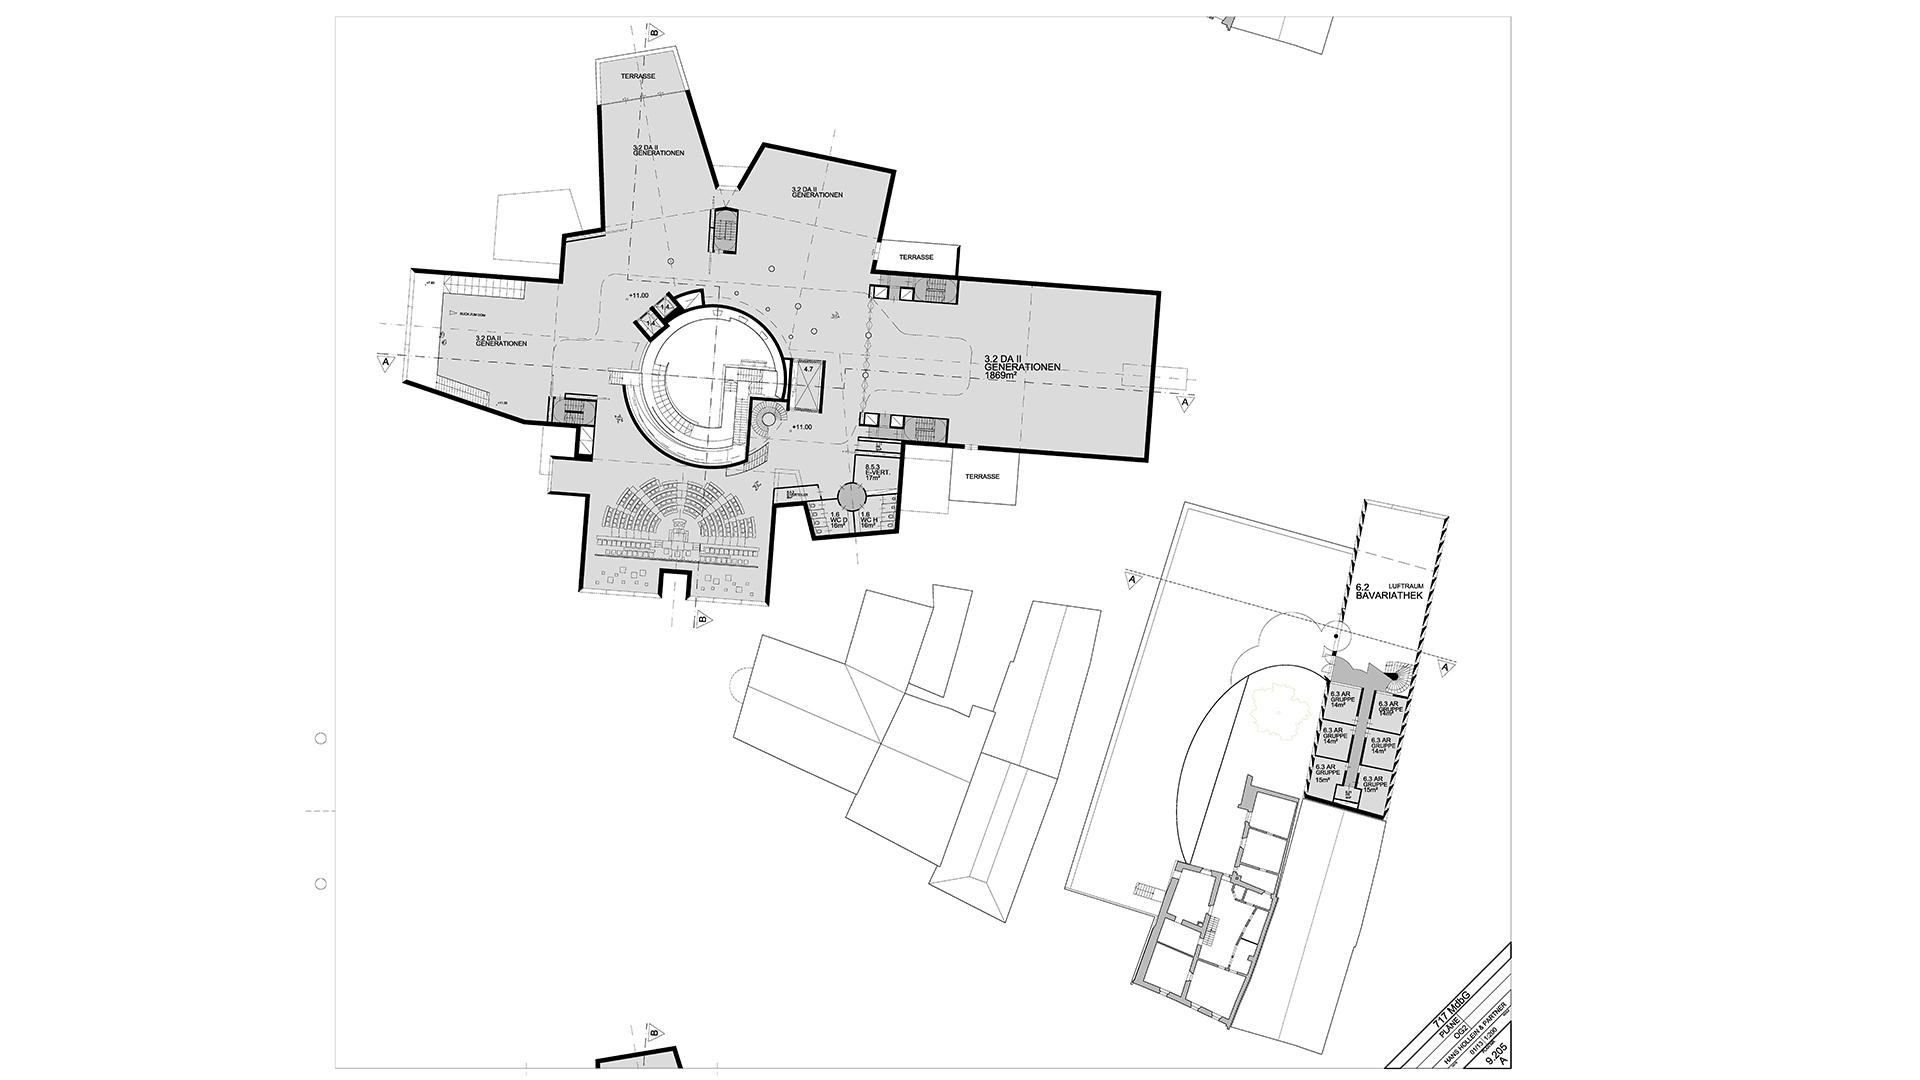 OHA - 717 MUSEUM BAYERISCHE GESCHICHTE 13 - Office For Heuristic Architecture